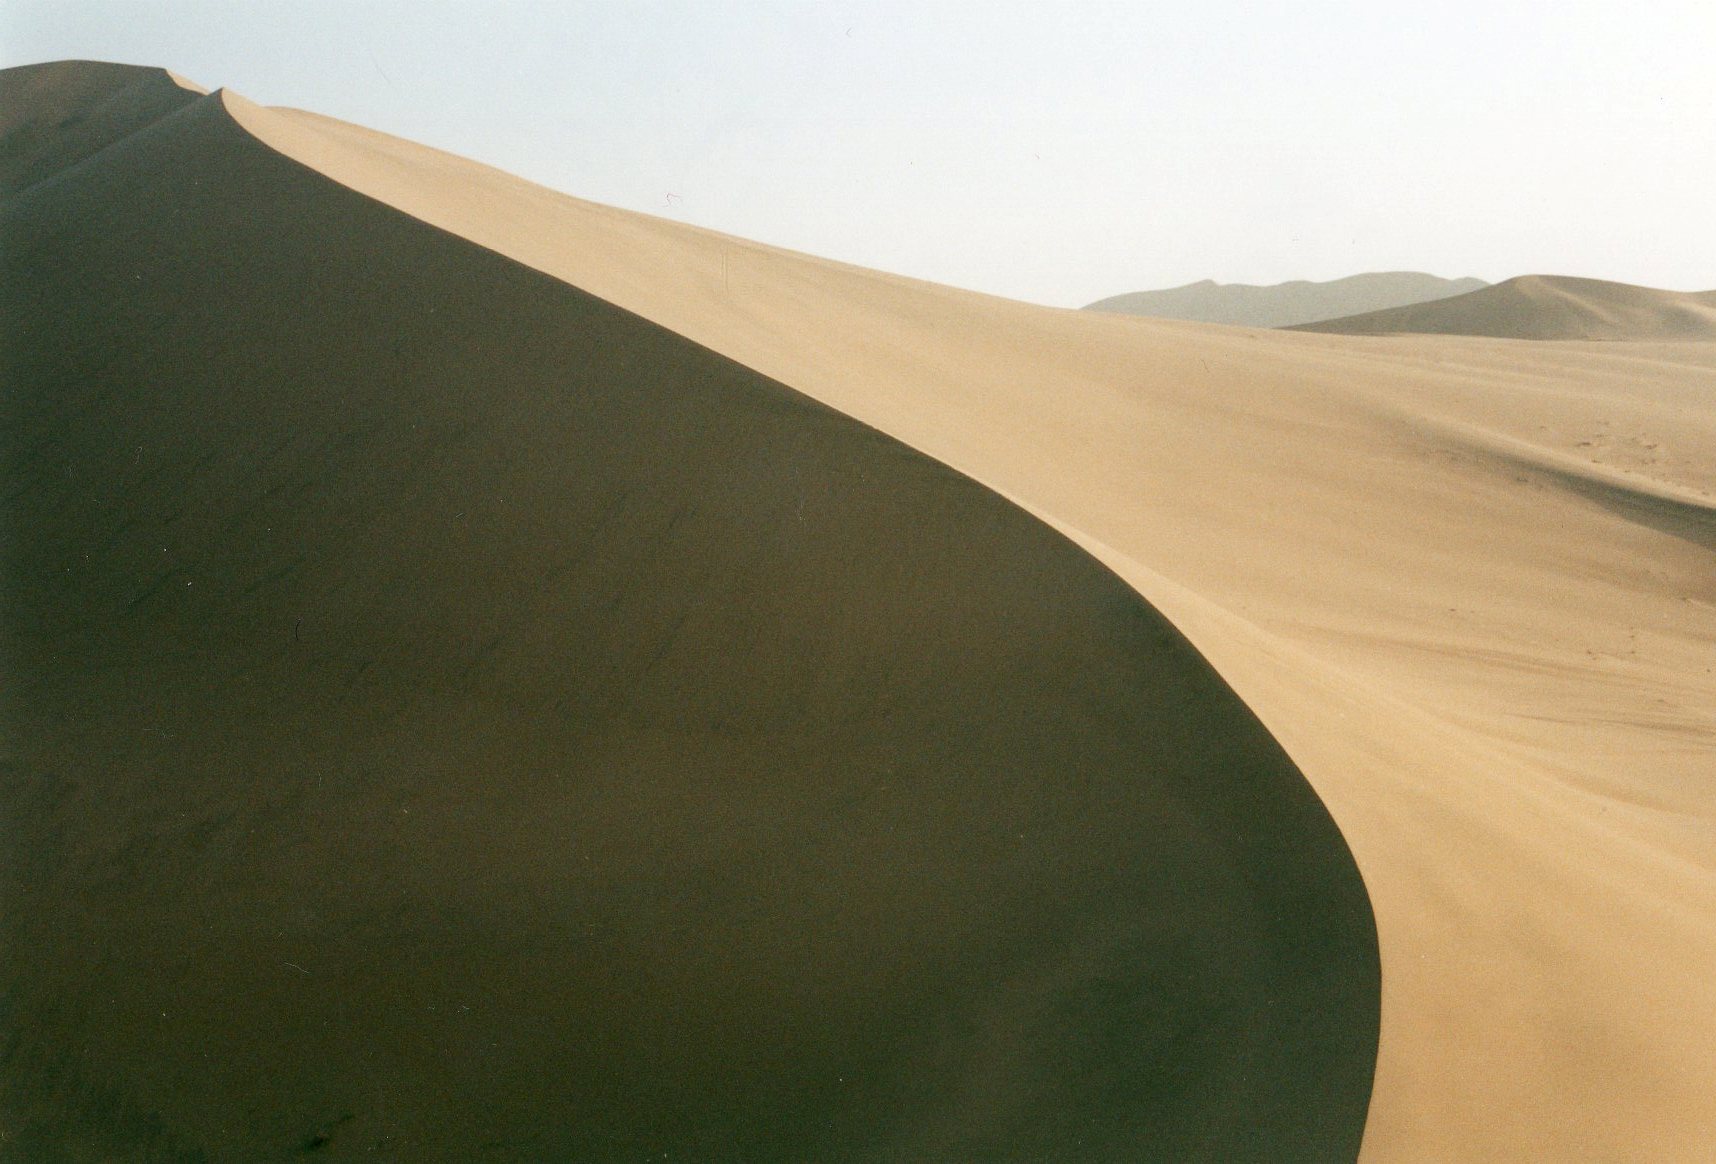 Mingsha Dunes, Dunhuang
Beautiful curves - © William Mackesy